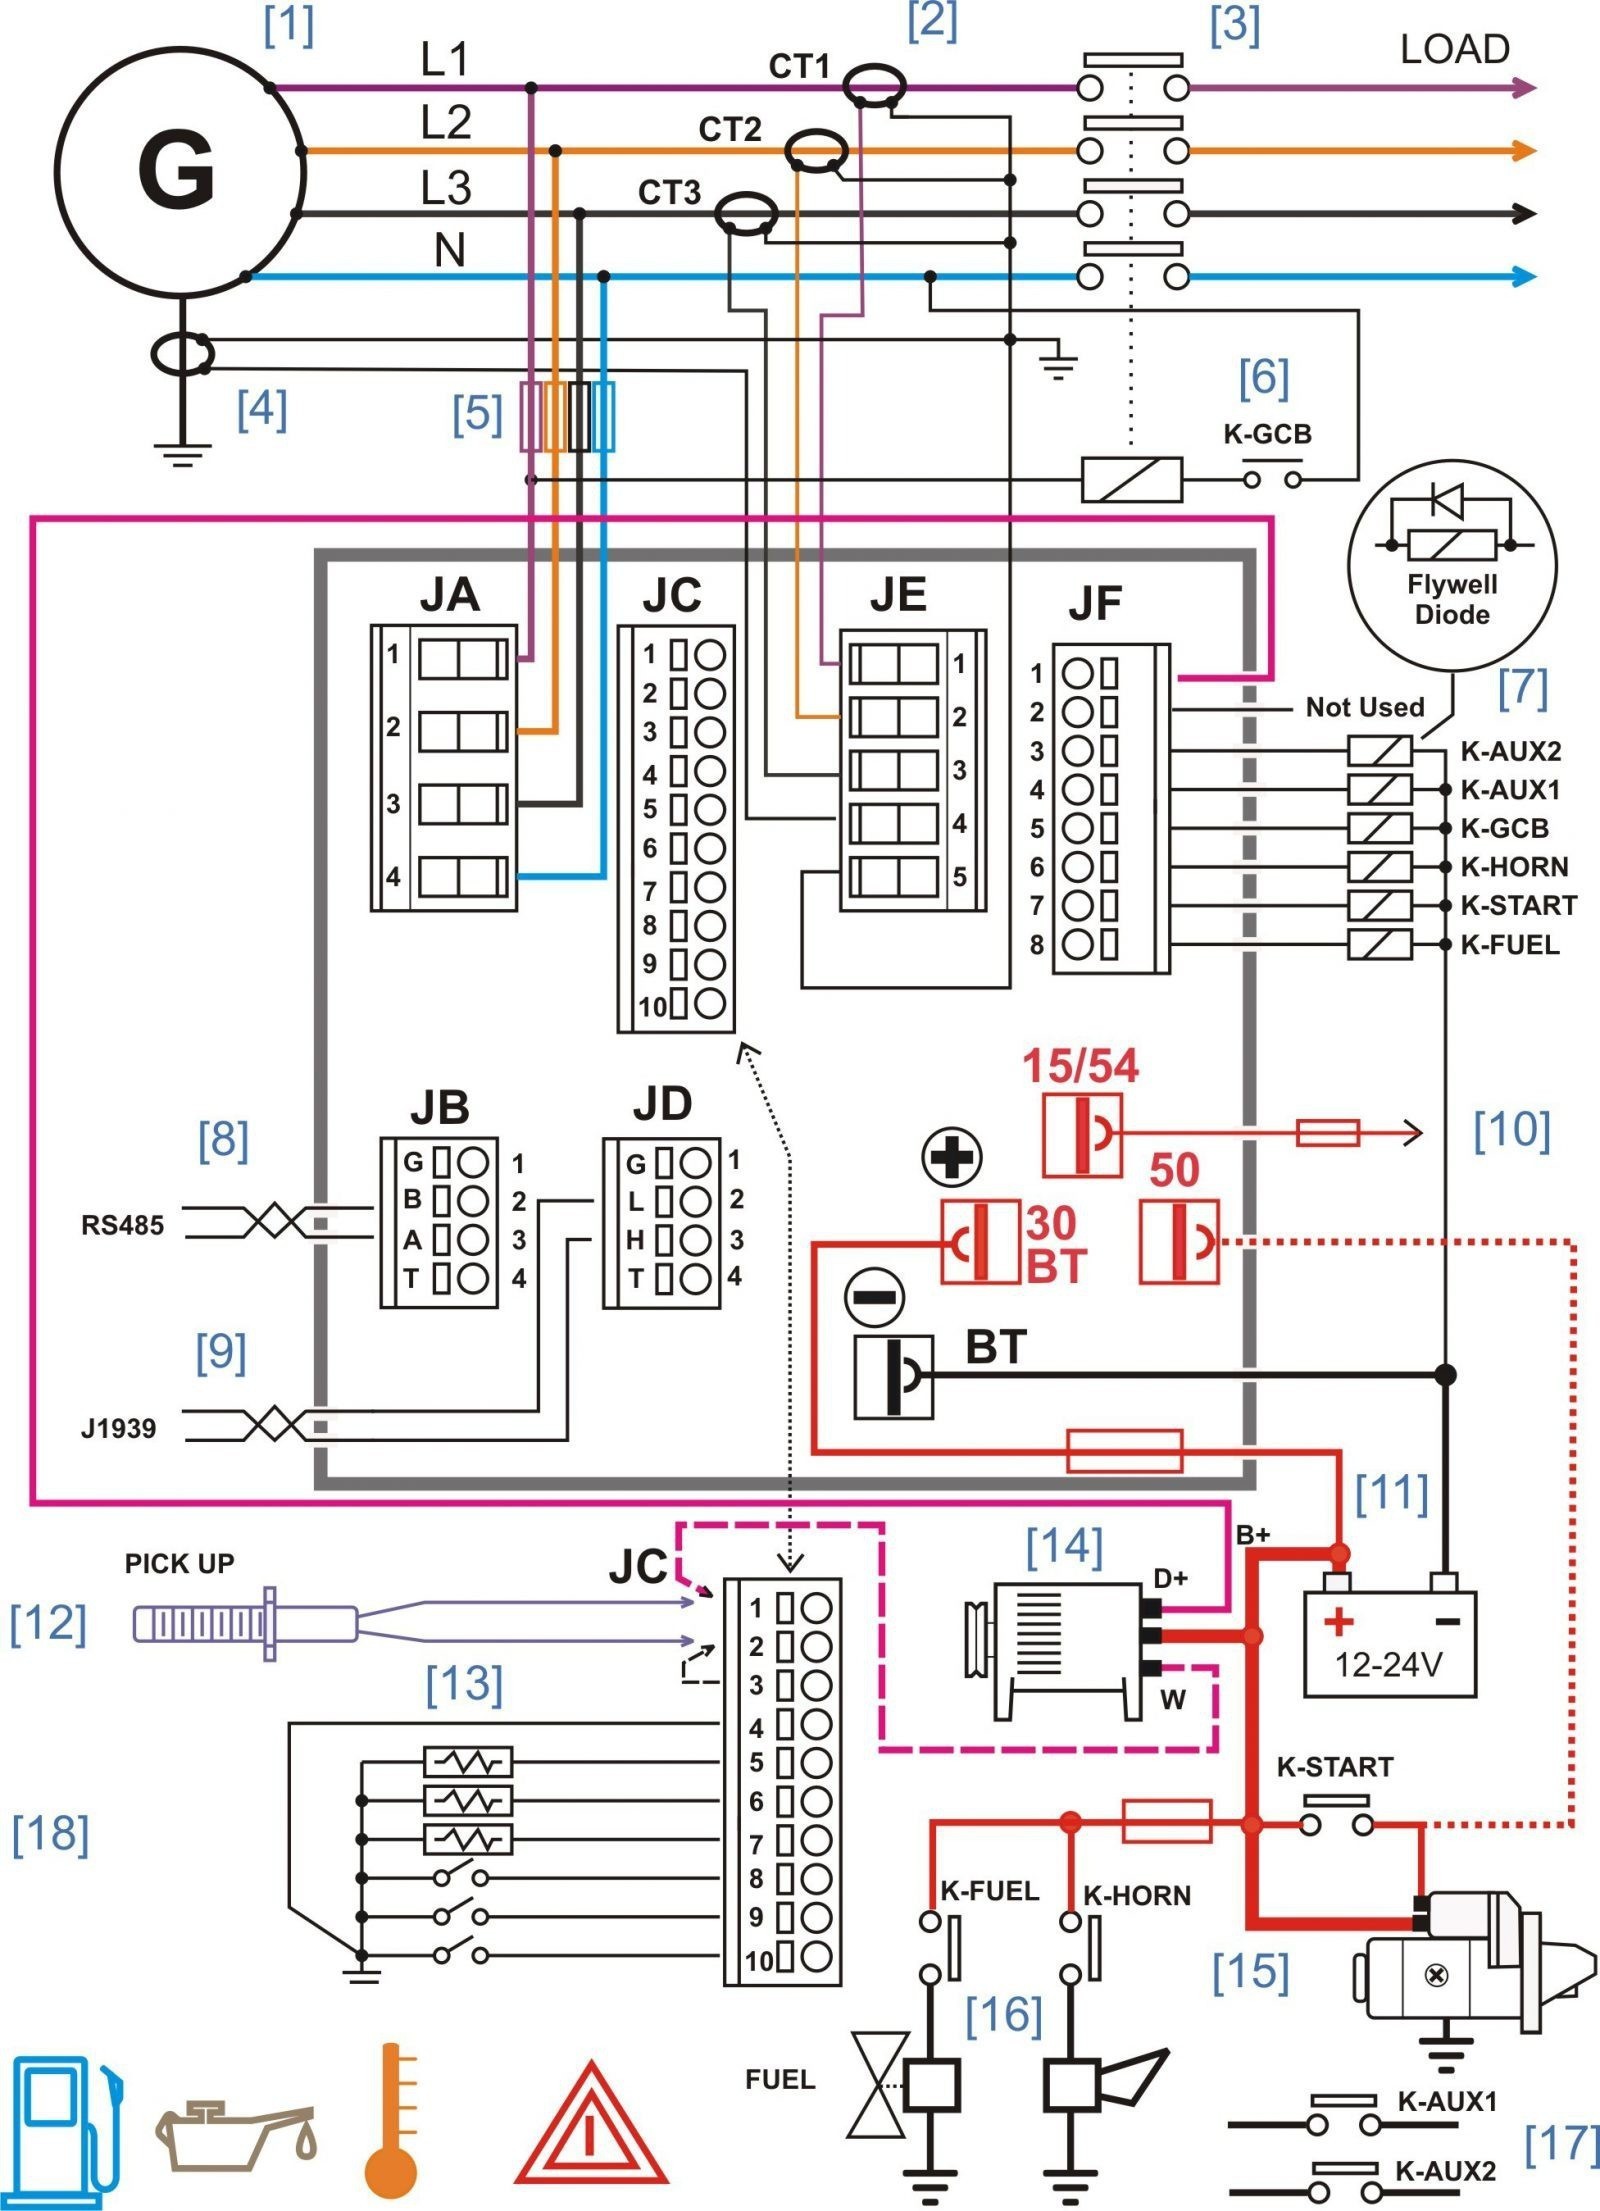 Wiring Diagram sony Car Stereo Wiring Diagram for Car Audio Perfect Wiring Diagram for Car Stereo Of Wiring Diagram sony Car Stereo